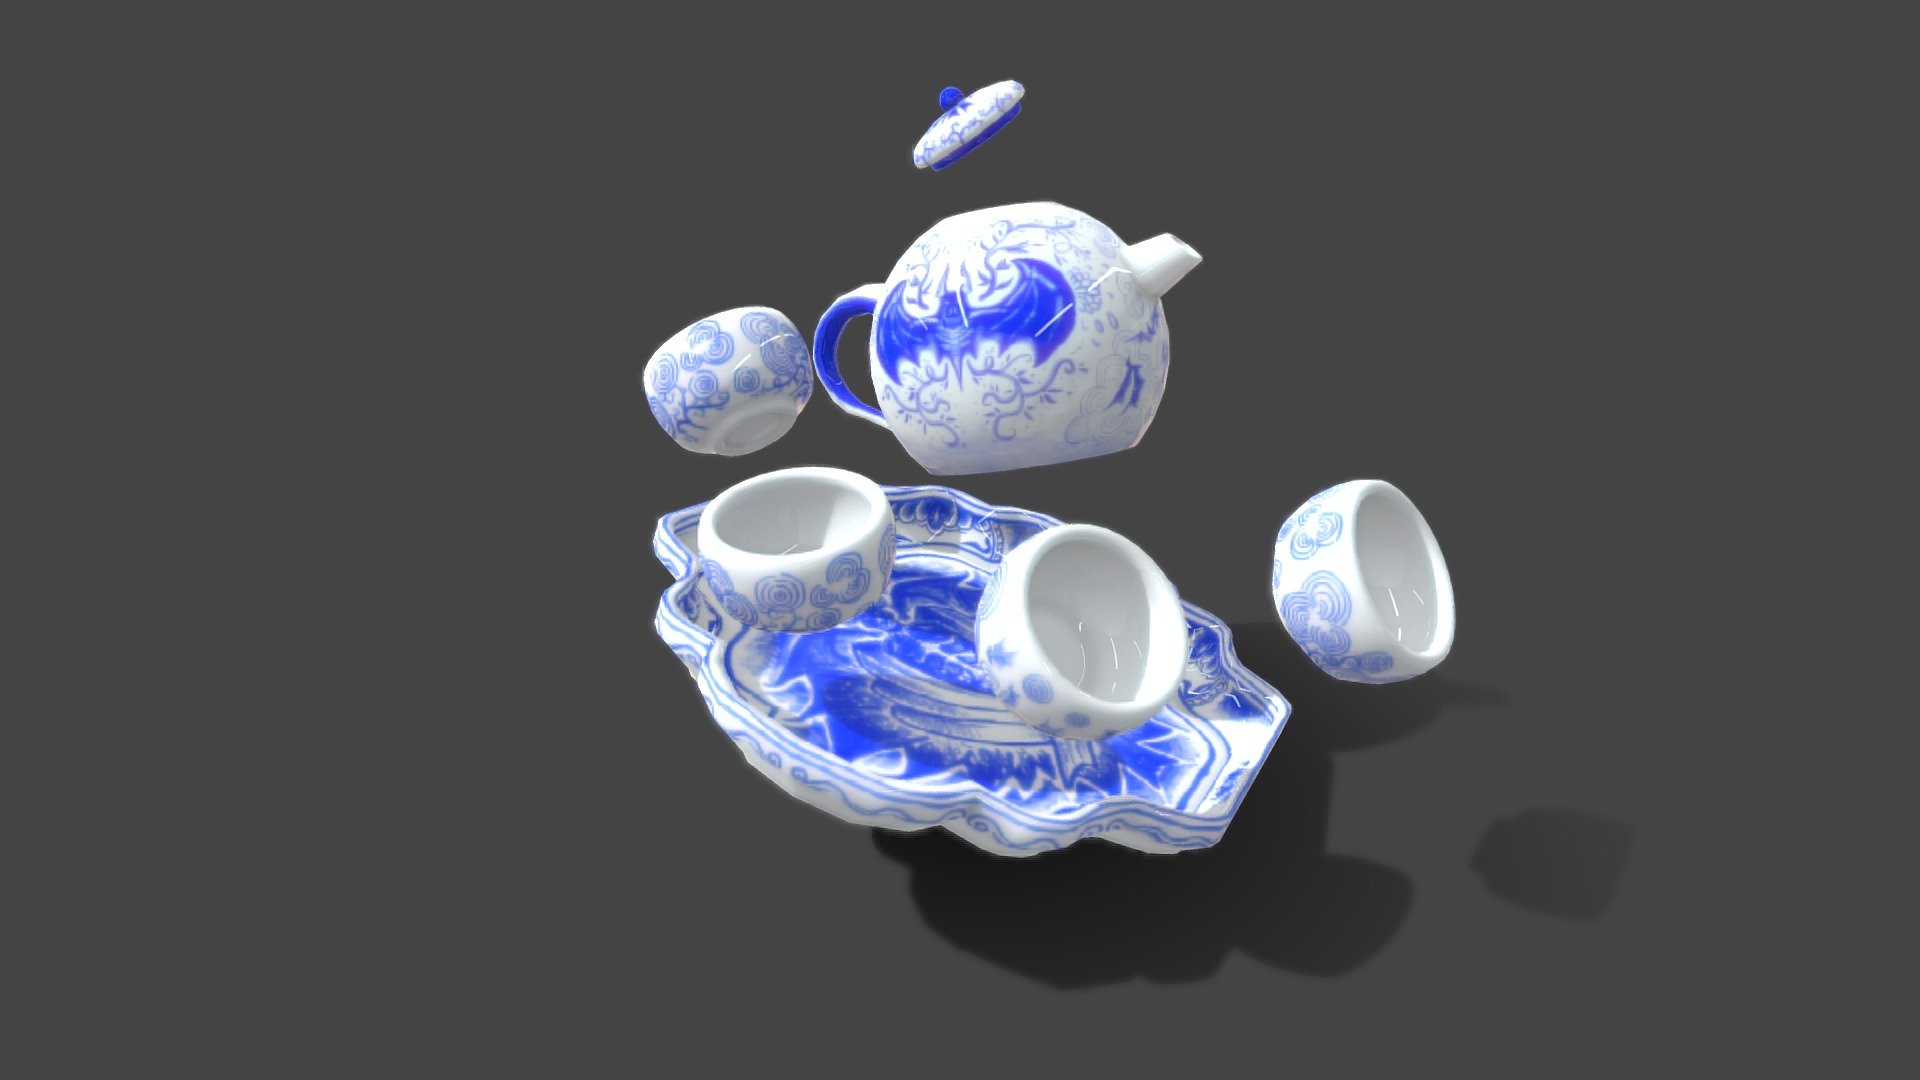 A Bat themed low poly blue china tea set.
Full modeling and texture painting process can be seen at https://www.youtube.com/watch?v=C3ywxCuVmPw&amp;list=PLZP8D4t8SATuDfQlyc5CbrrshrFUCMj8y - Batty Blue China Tea Set - Buy Royalty Free 3D model by Chaitanya Krishnan (@chaitanyak) 3d model